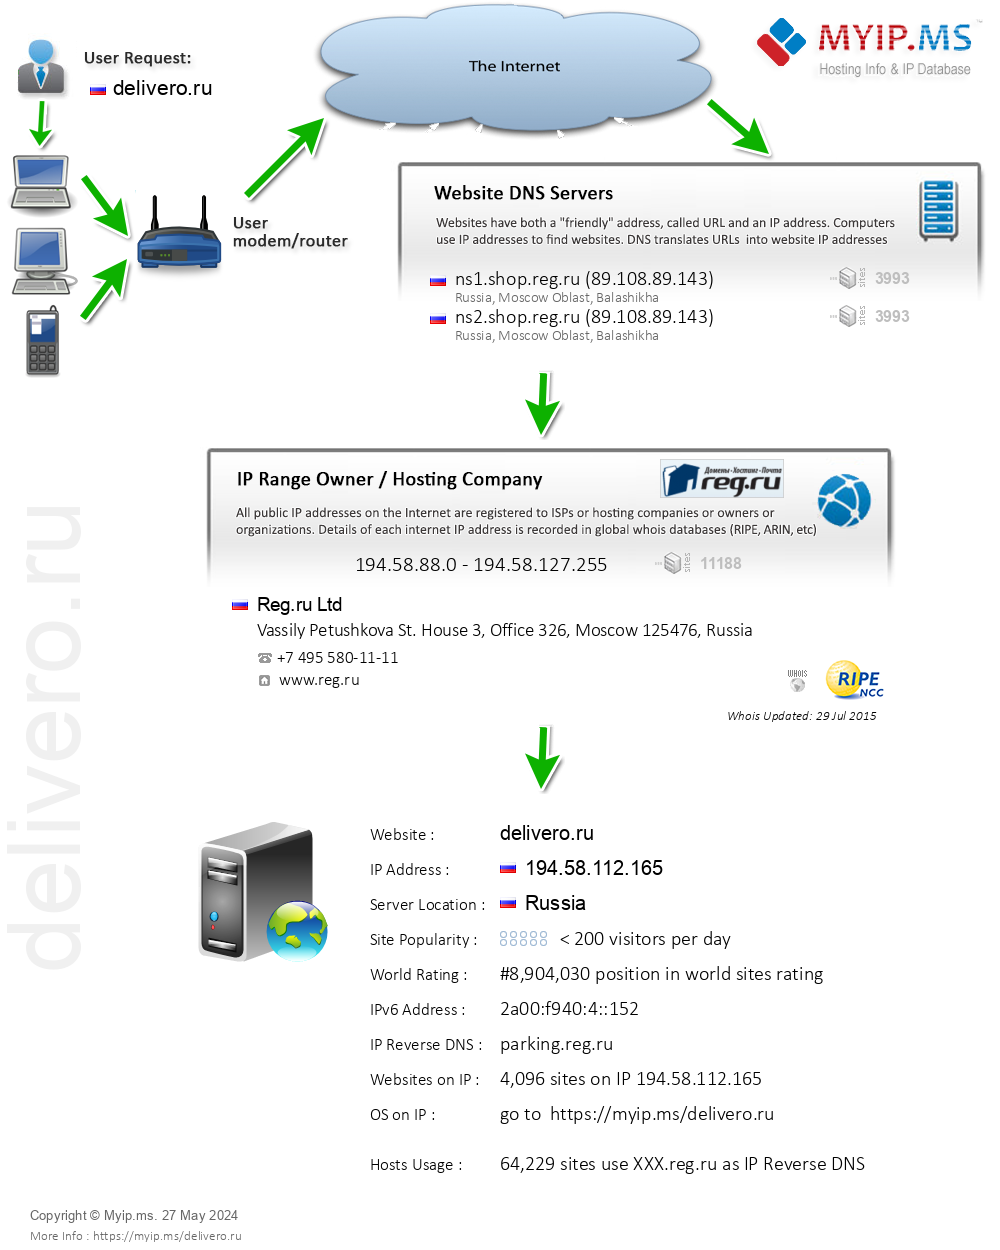 Delivero.ru - Website Hosting Visual IP Diagram